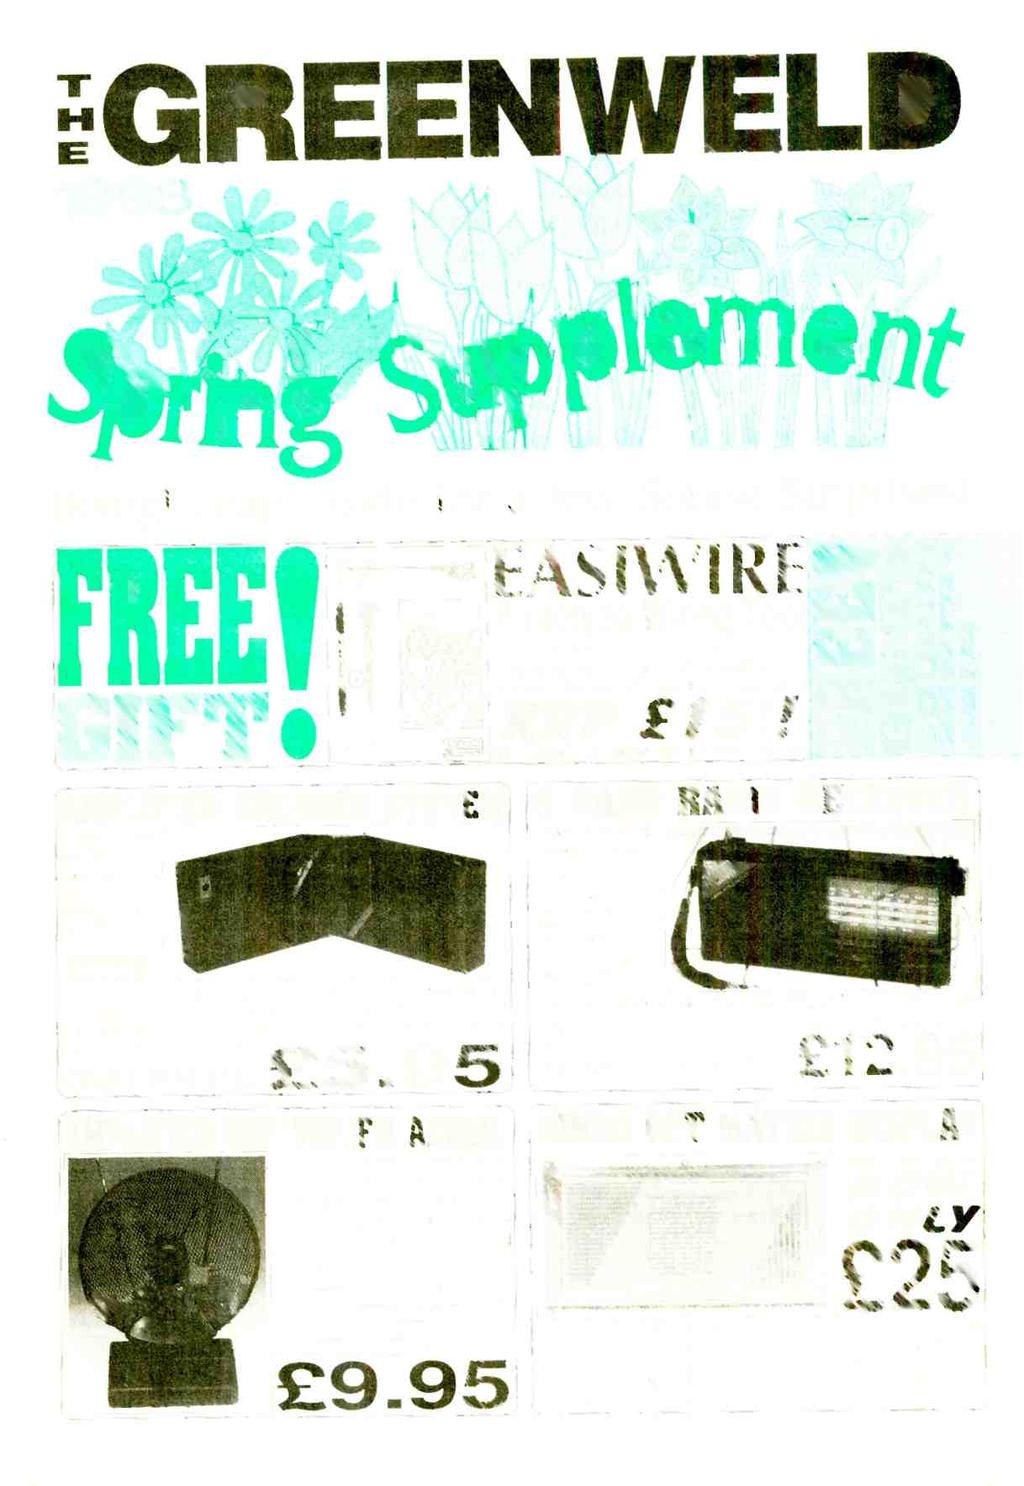 irigreen 1993 ELD 4i*I1V) fill IA I MR I MI fity 1 I LI L Boing! Leap inside for a few Spring Surprises!